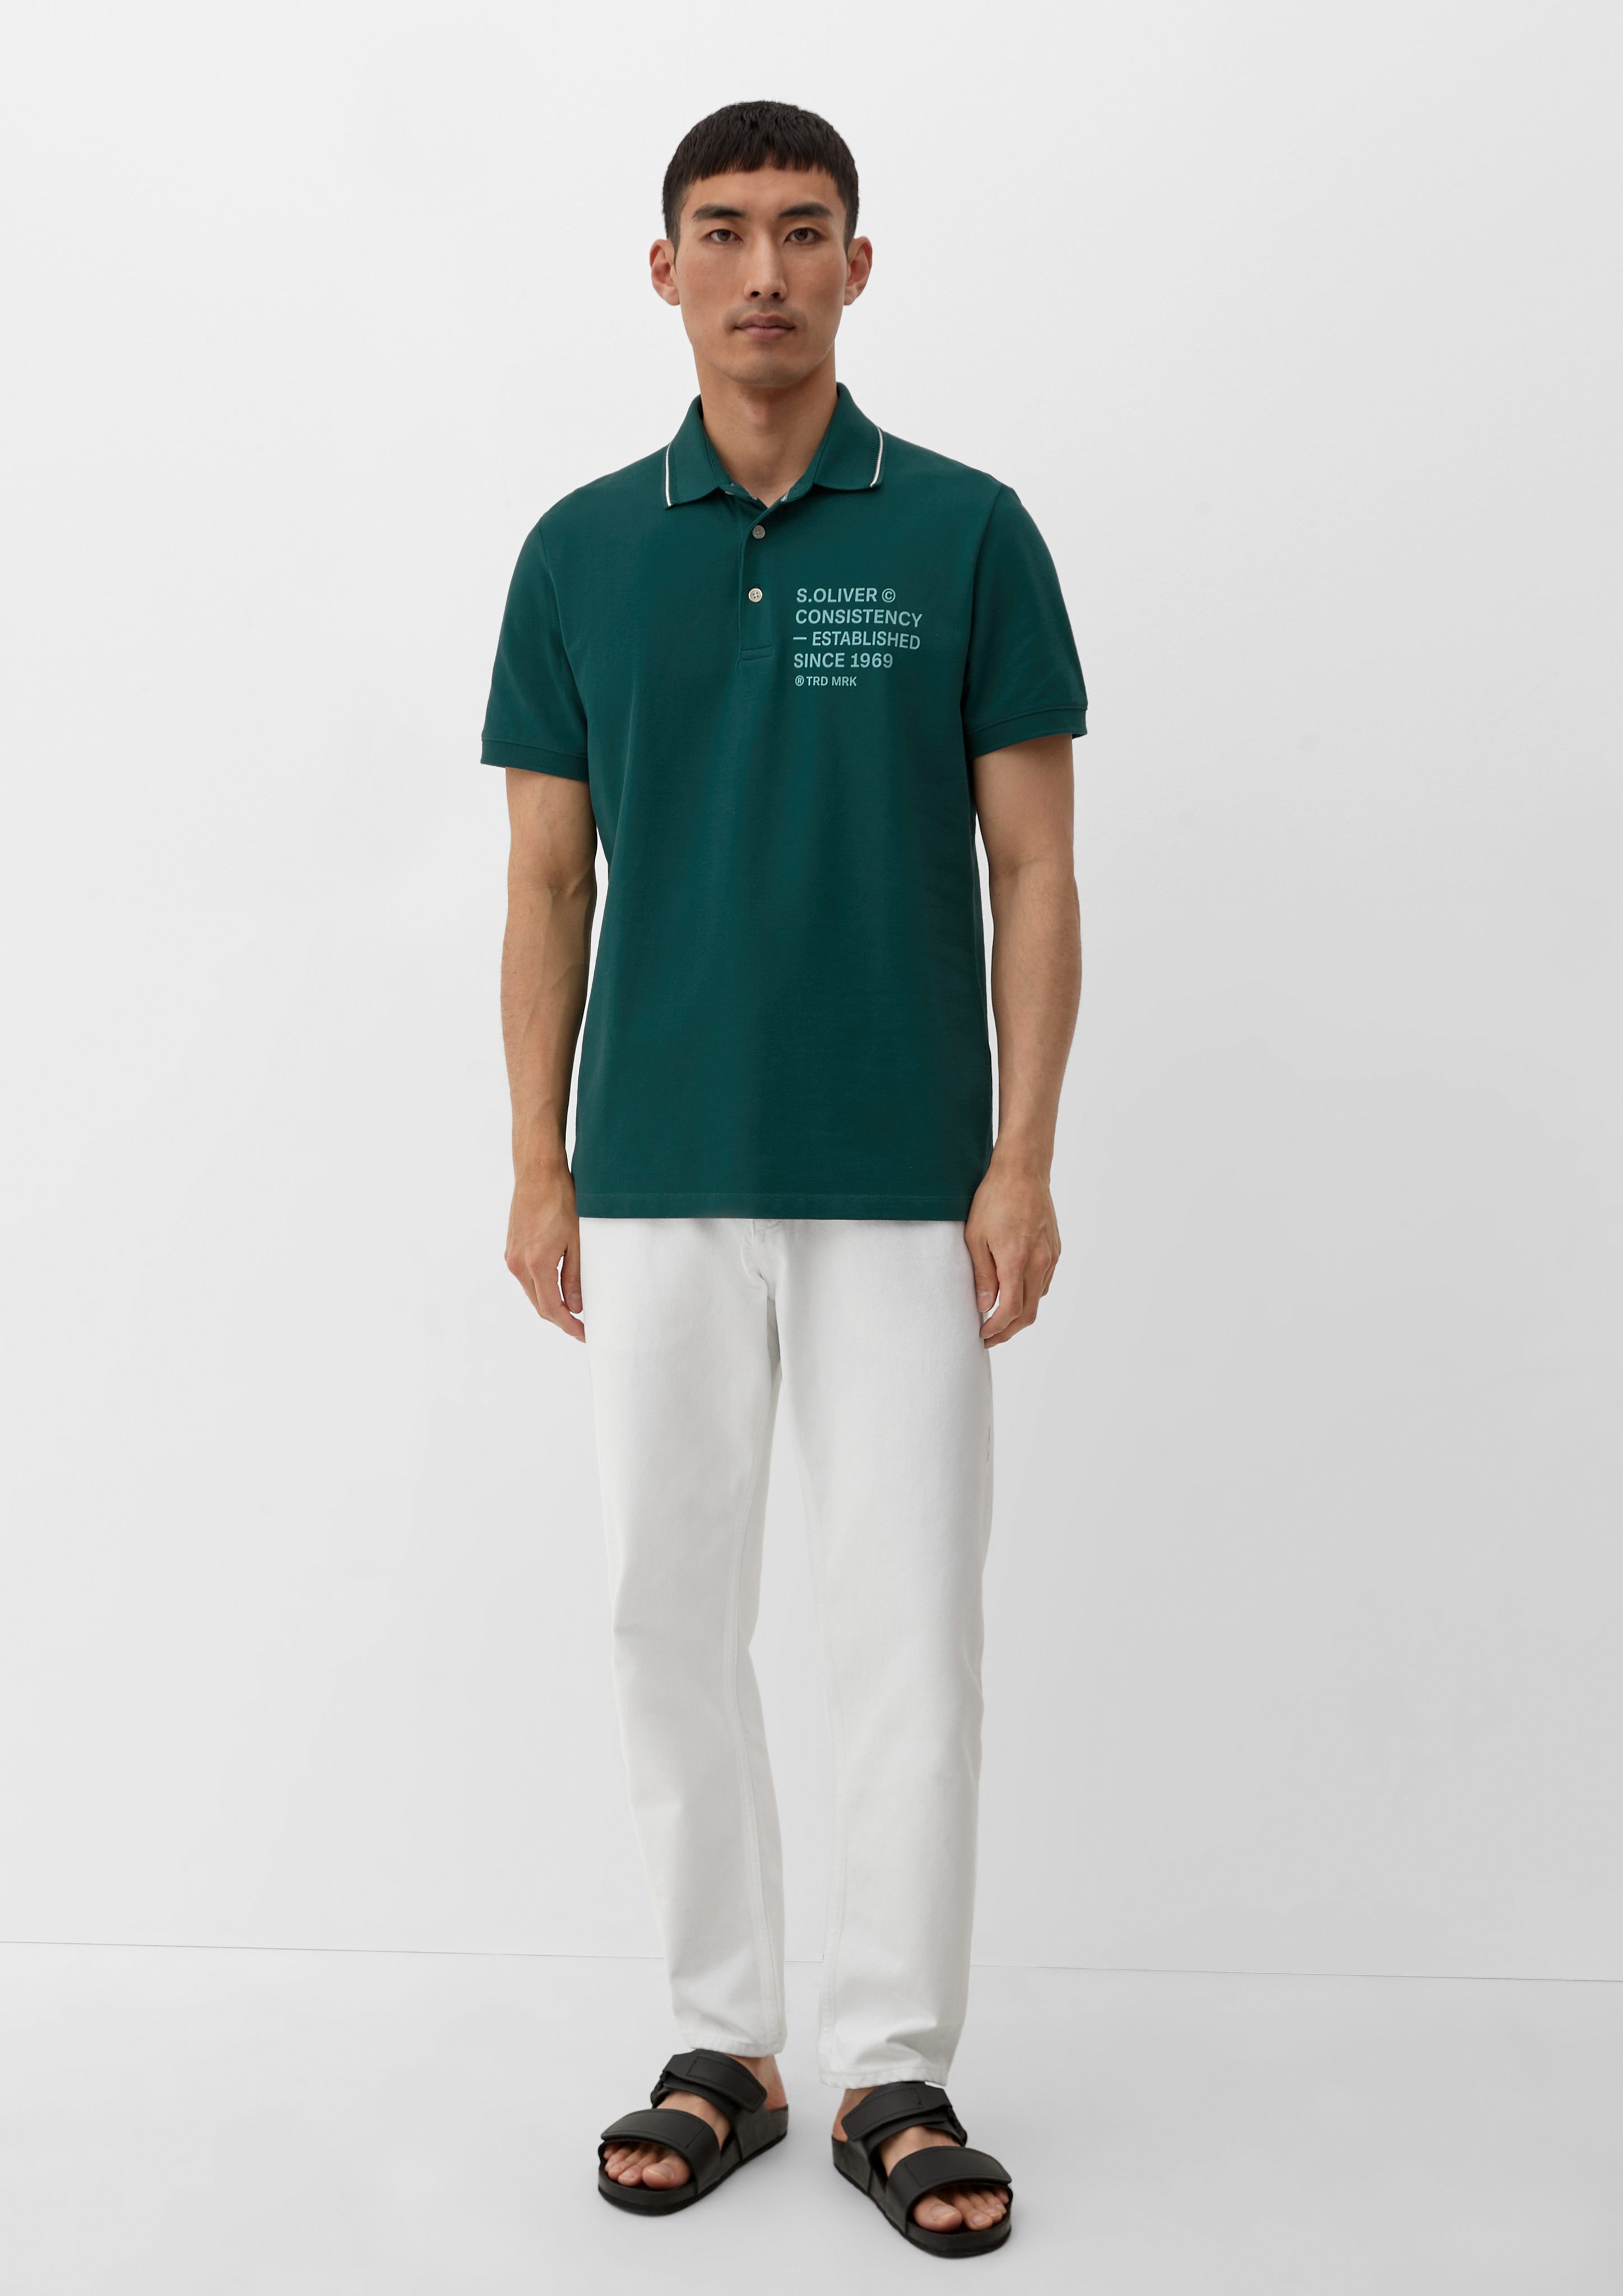 s.Oliver Kurzarmshirt Poloshirt mit tannengrün Piquéstruktur Blende Artwork